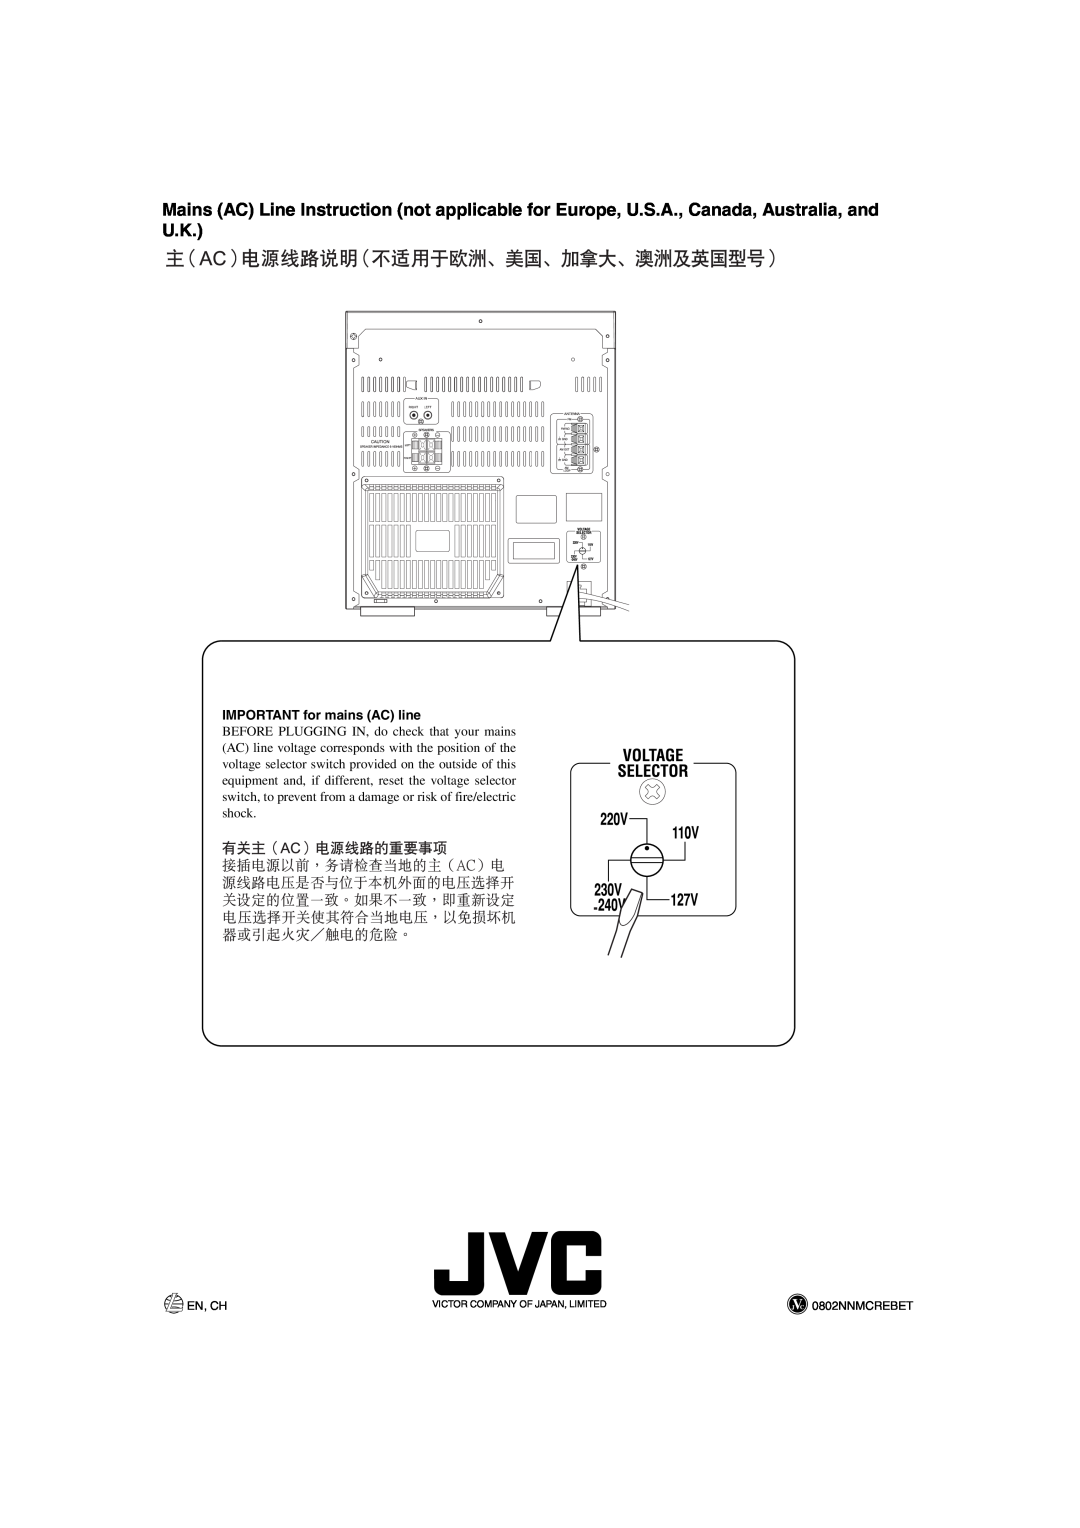 JVC MX-K350V manual IMPORTANT for mains AC line, En, Ch, 0802NNMCREBET 